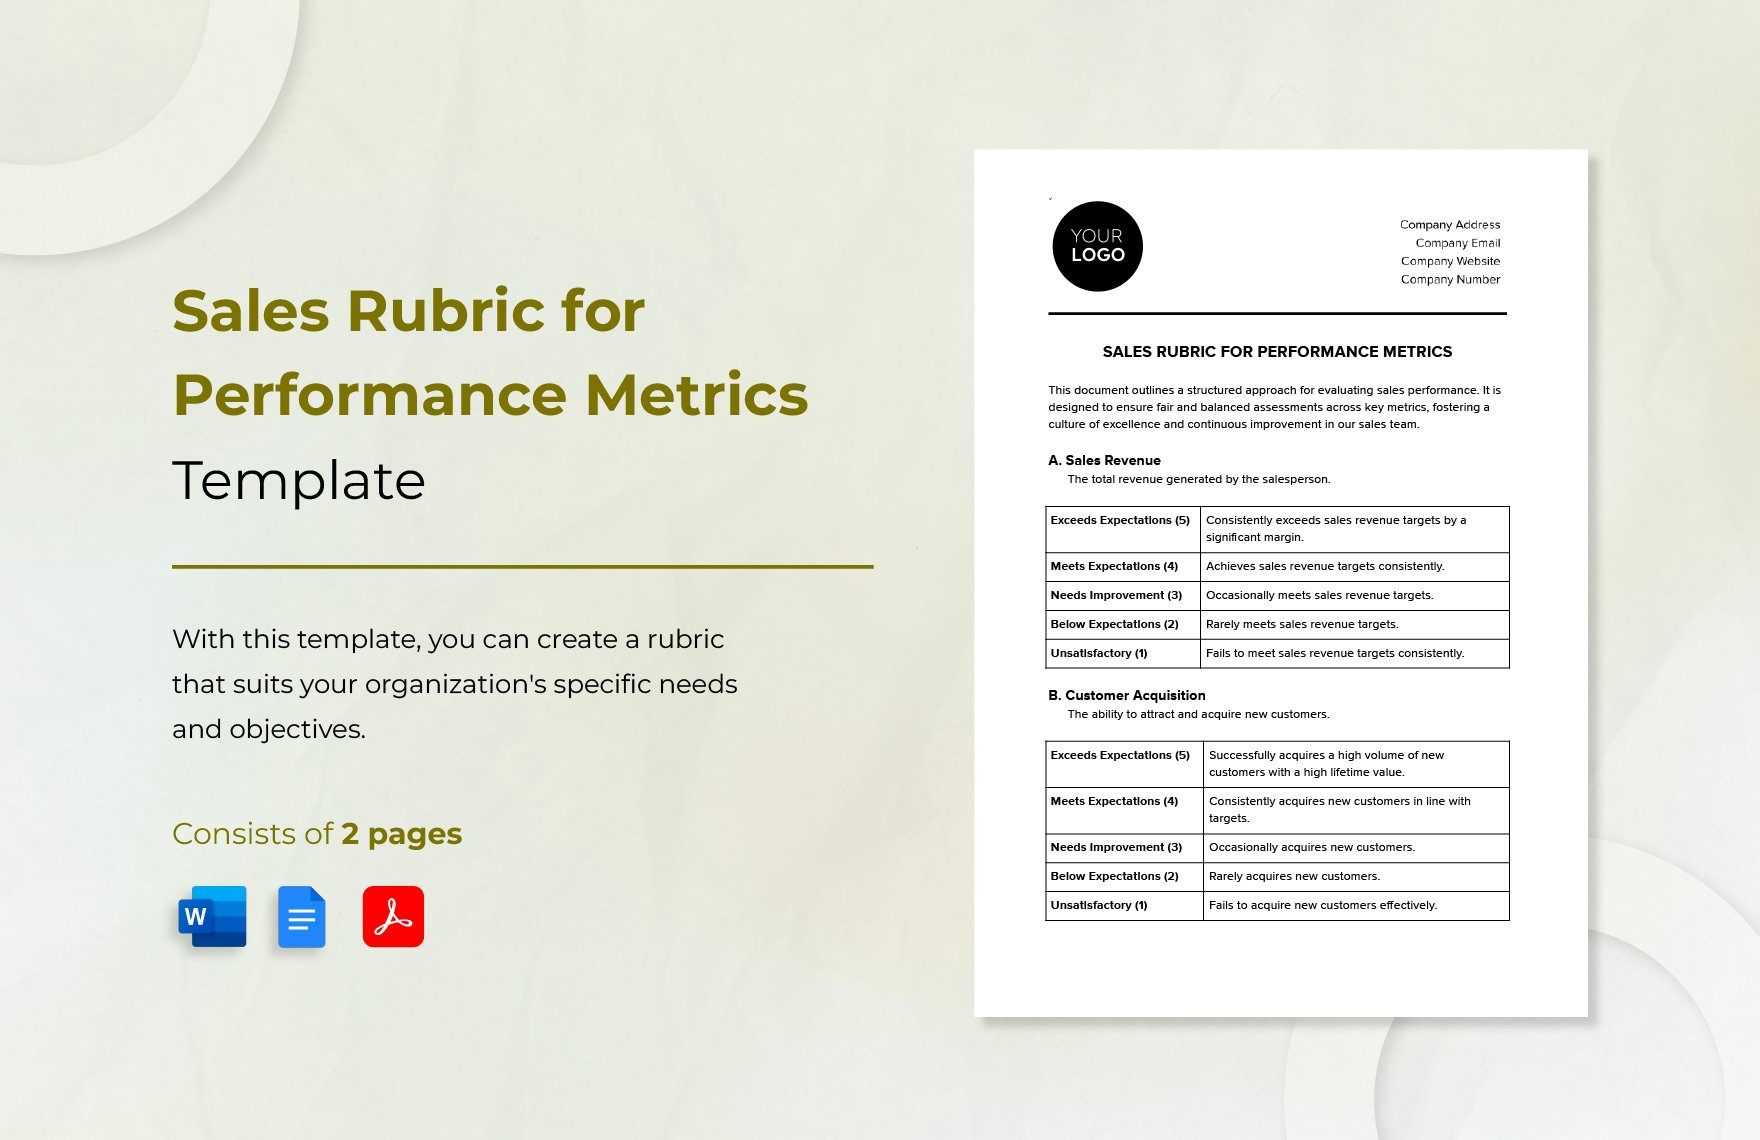 Sales Rubric for Performance Metrics Template